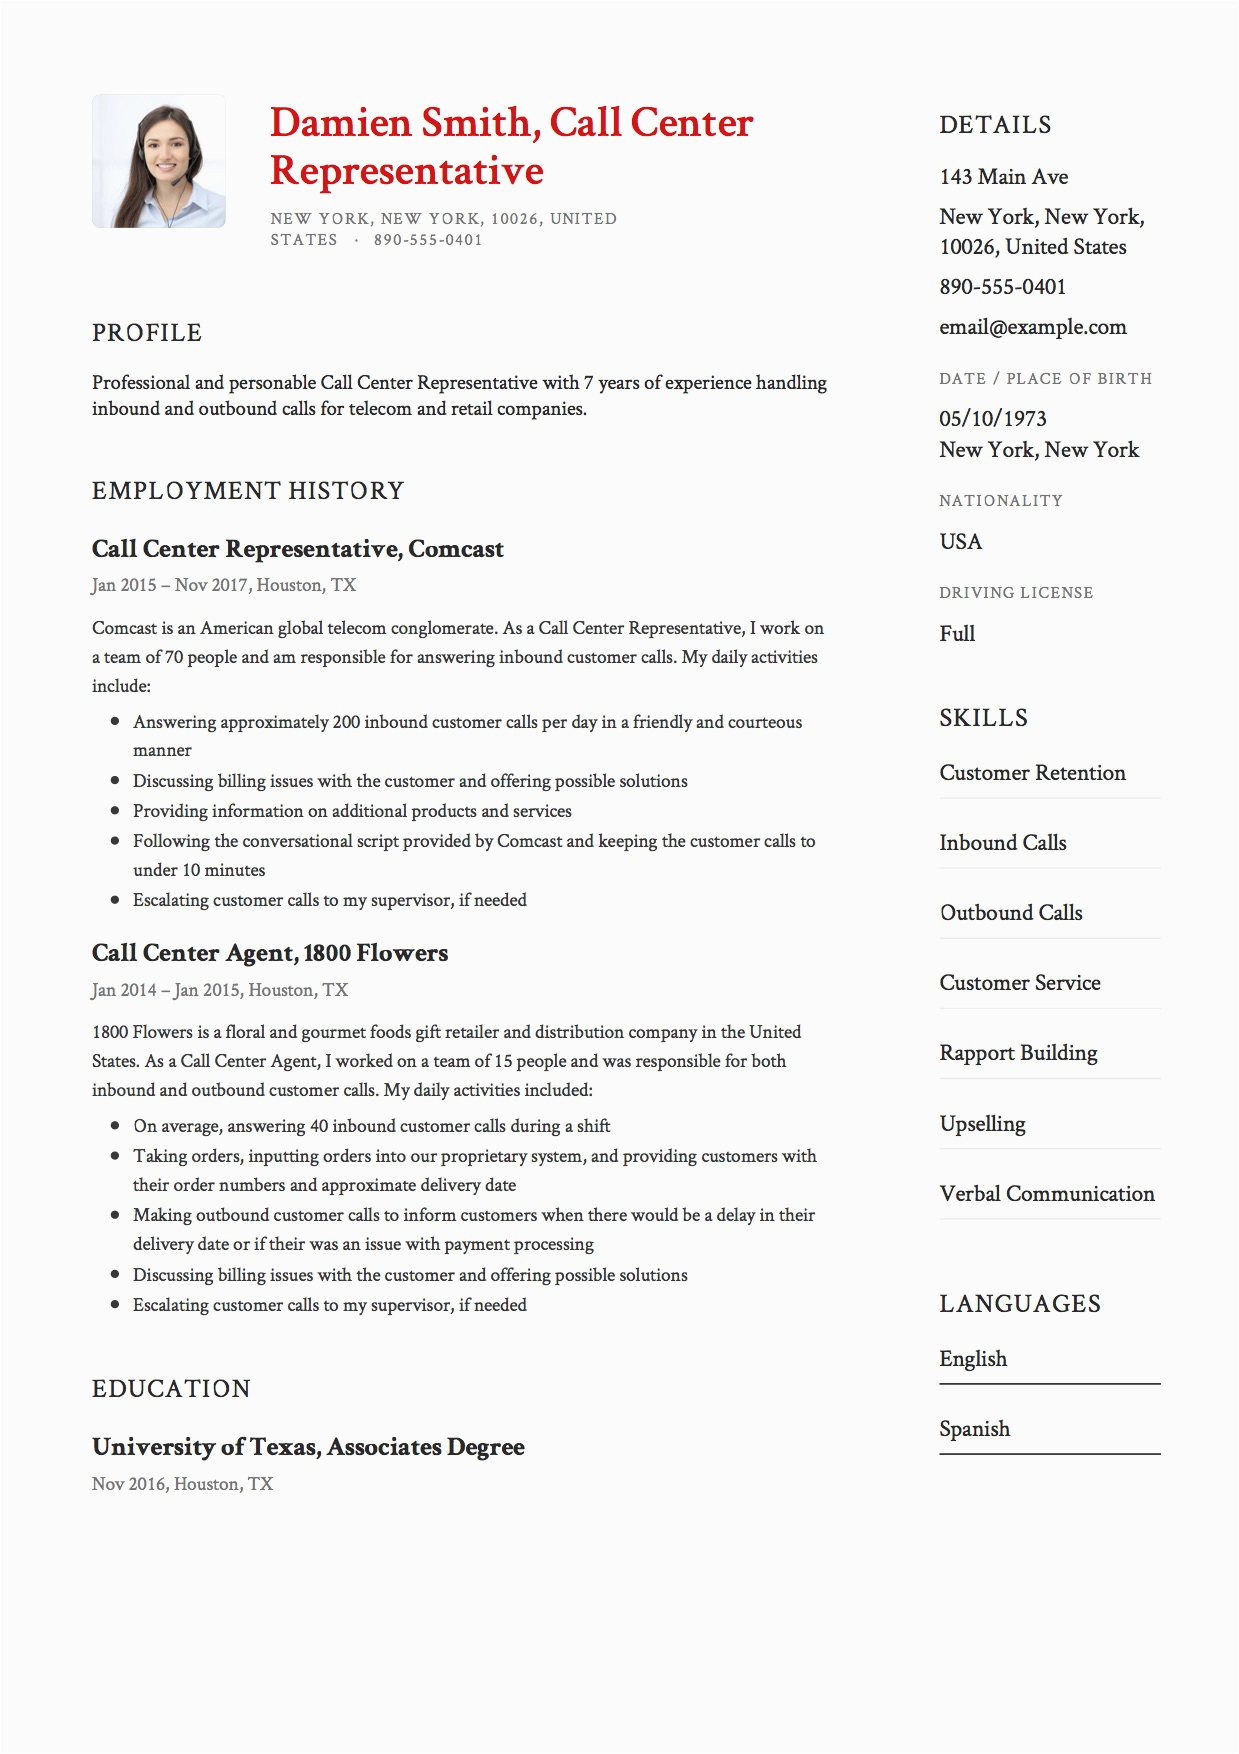 Sample Resume for Call Center Representative Call Center Customer Service Representative Resume Examples